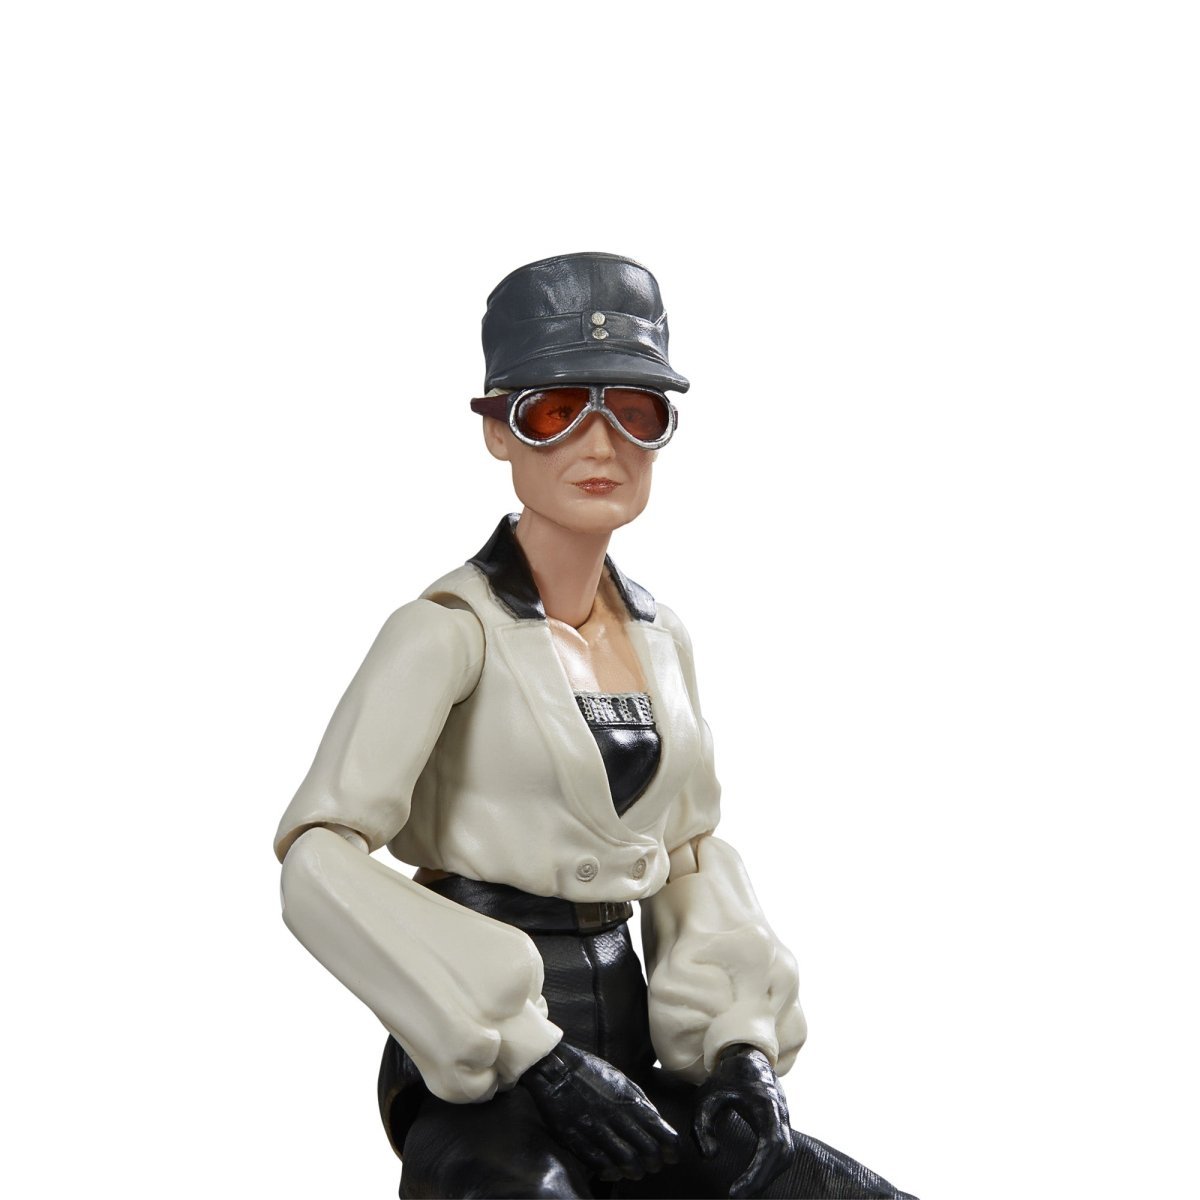 Dr. Elsa Schneider (Last Crusade) Indiana Jones Adventure Series 6-Inch Action Figure Pop-O-Loco